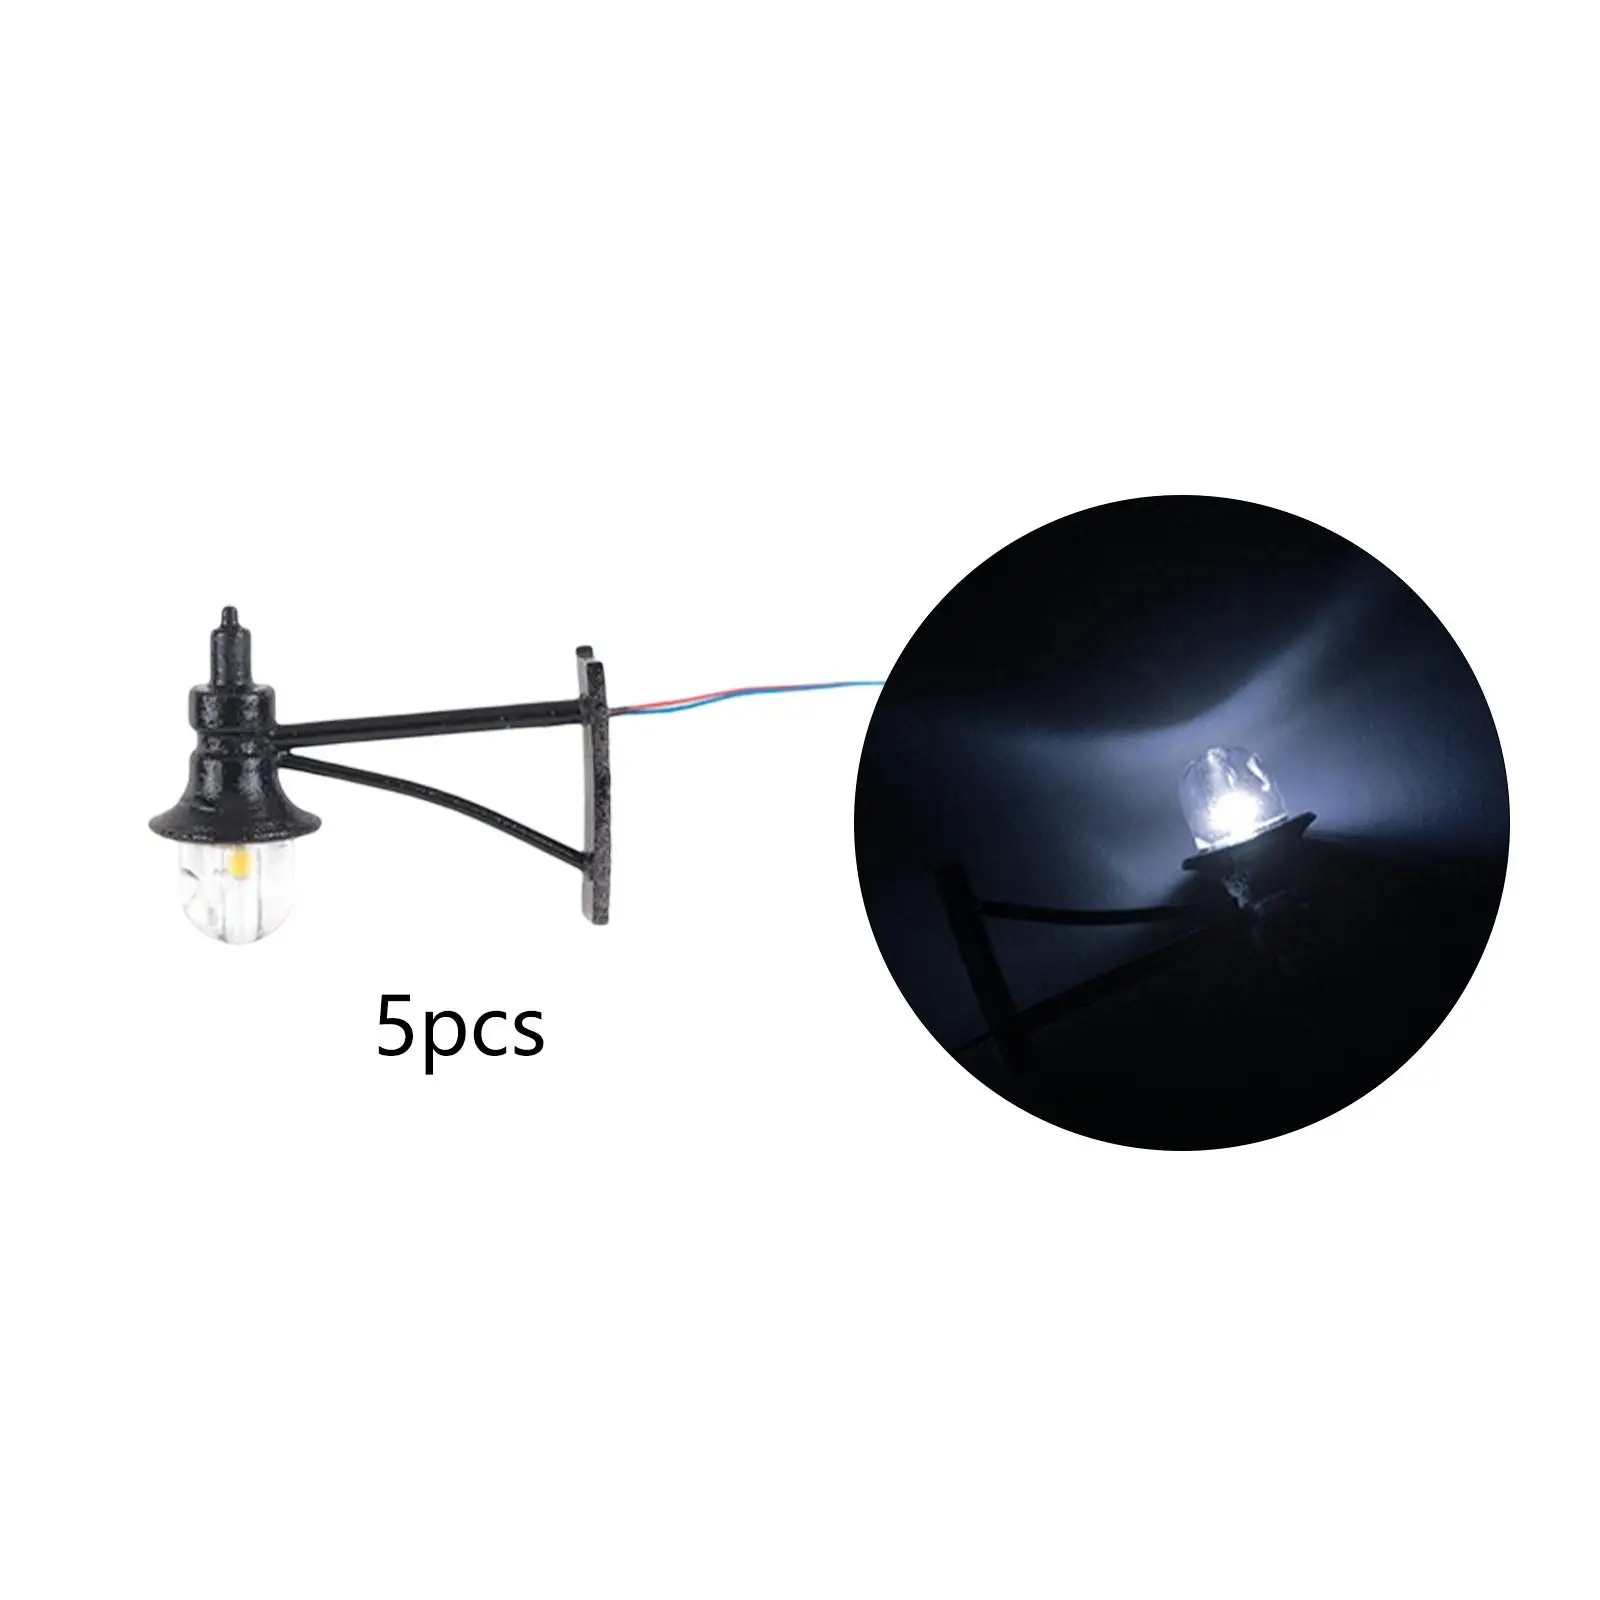 5x Mini Model Railway Lamps Durable DIY Lighting Scenery Simulation Decor 1:87